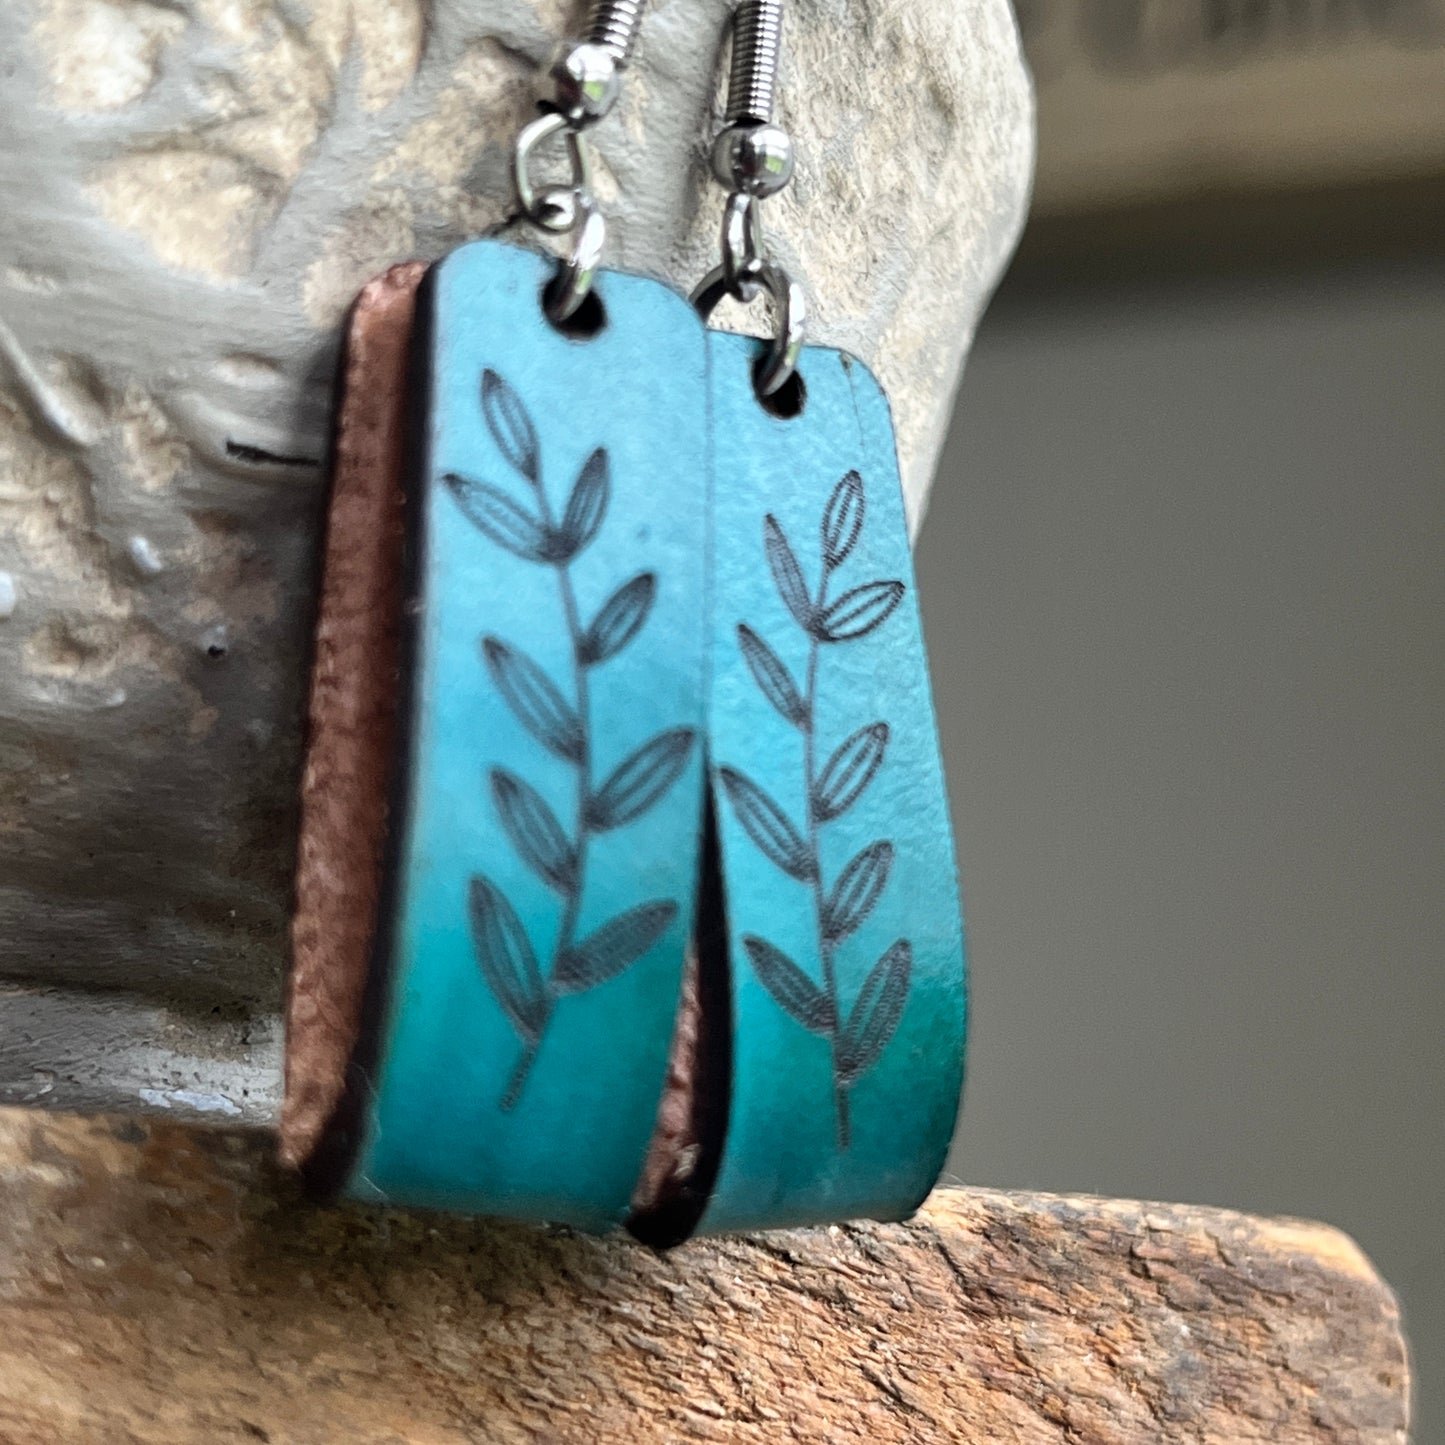 Boho Turquoise Leather Engraved Earrings with Leaf Design, Modern Loop Earrings